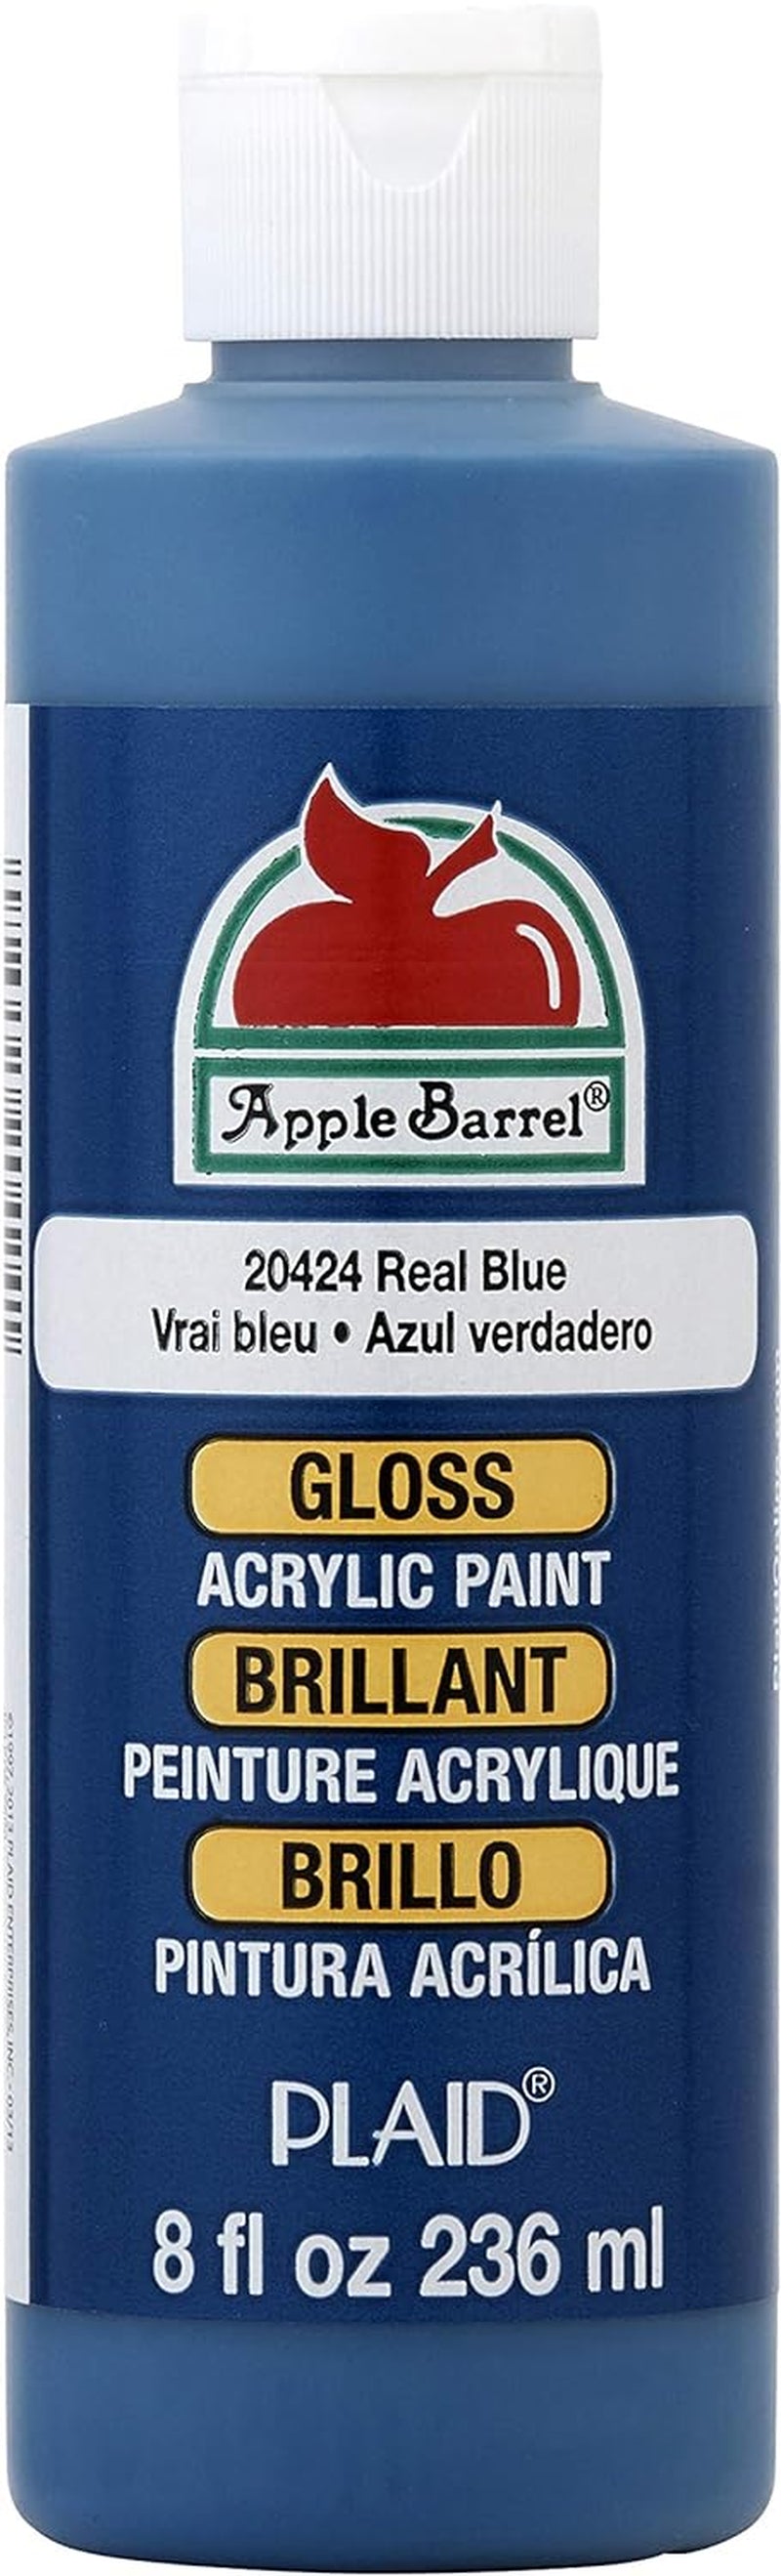 Apple Barrel Acrylic Craft Paint, Gloss Finish, Real Brown, 8 fl oz